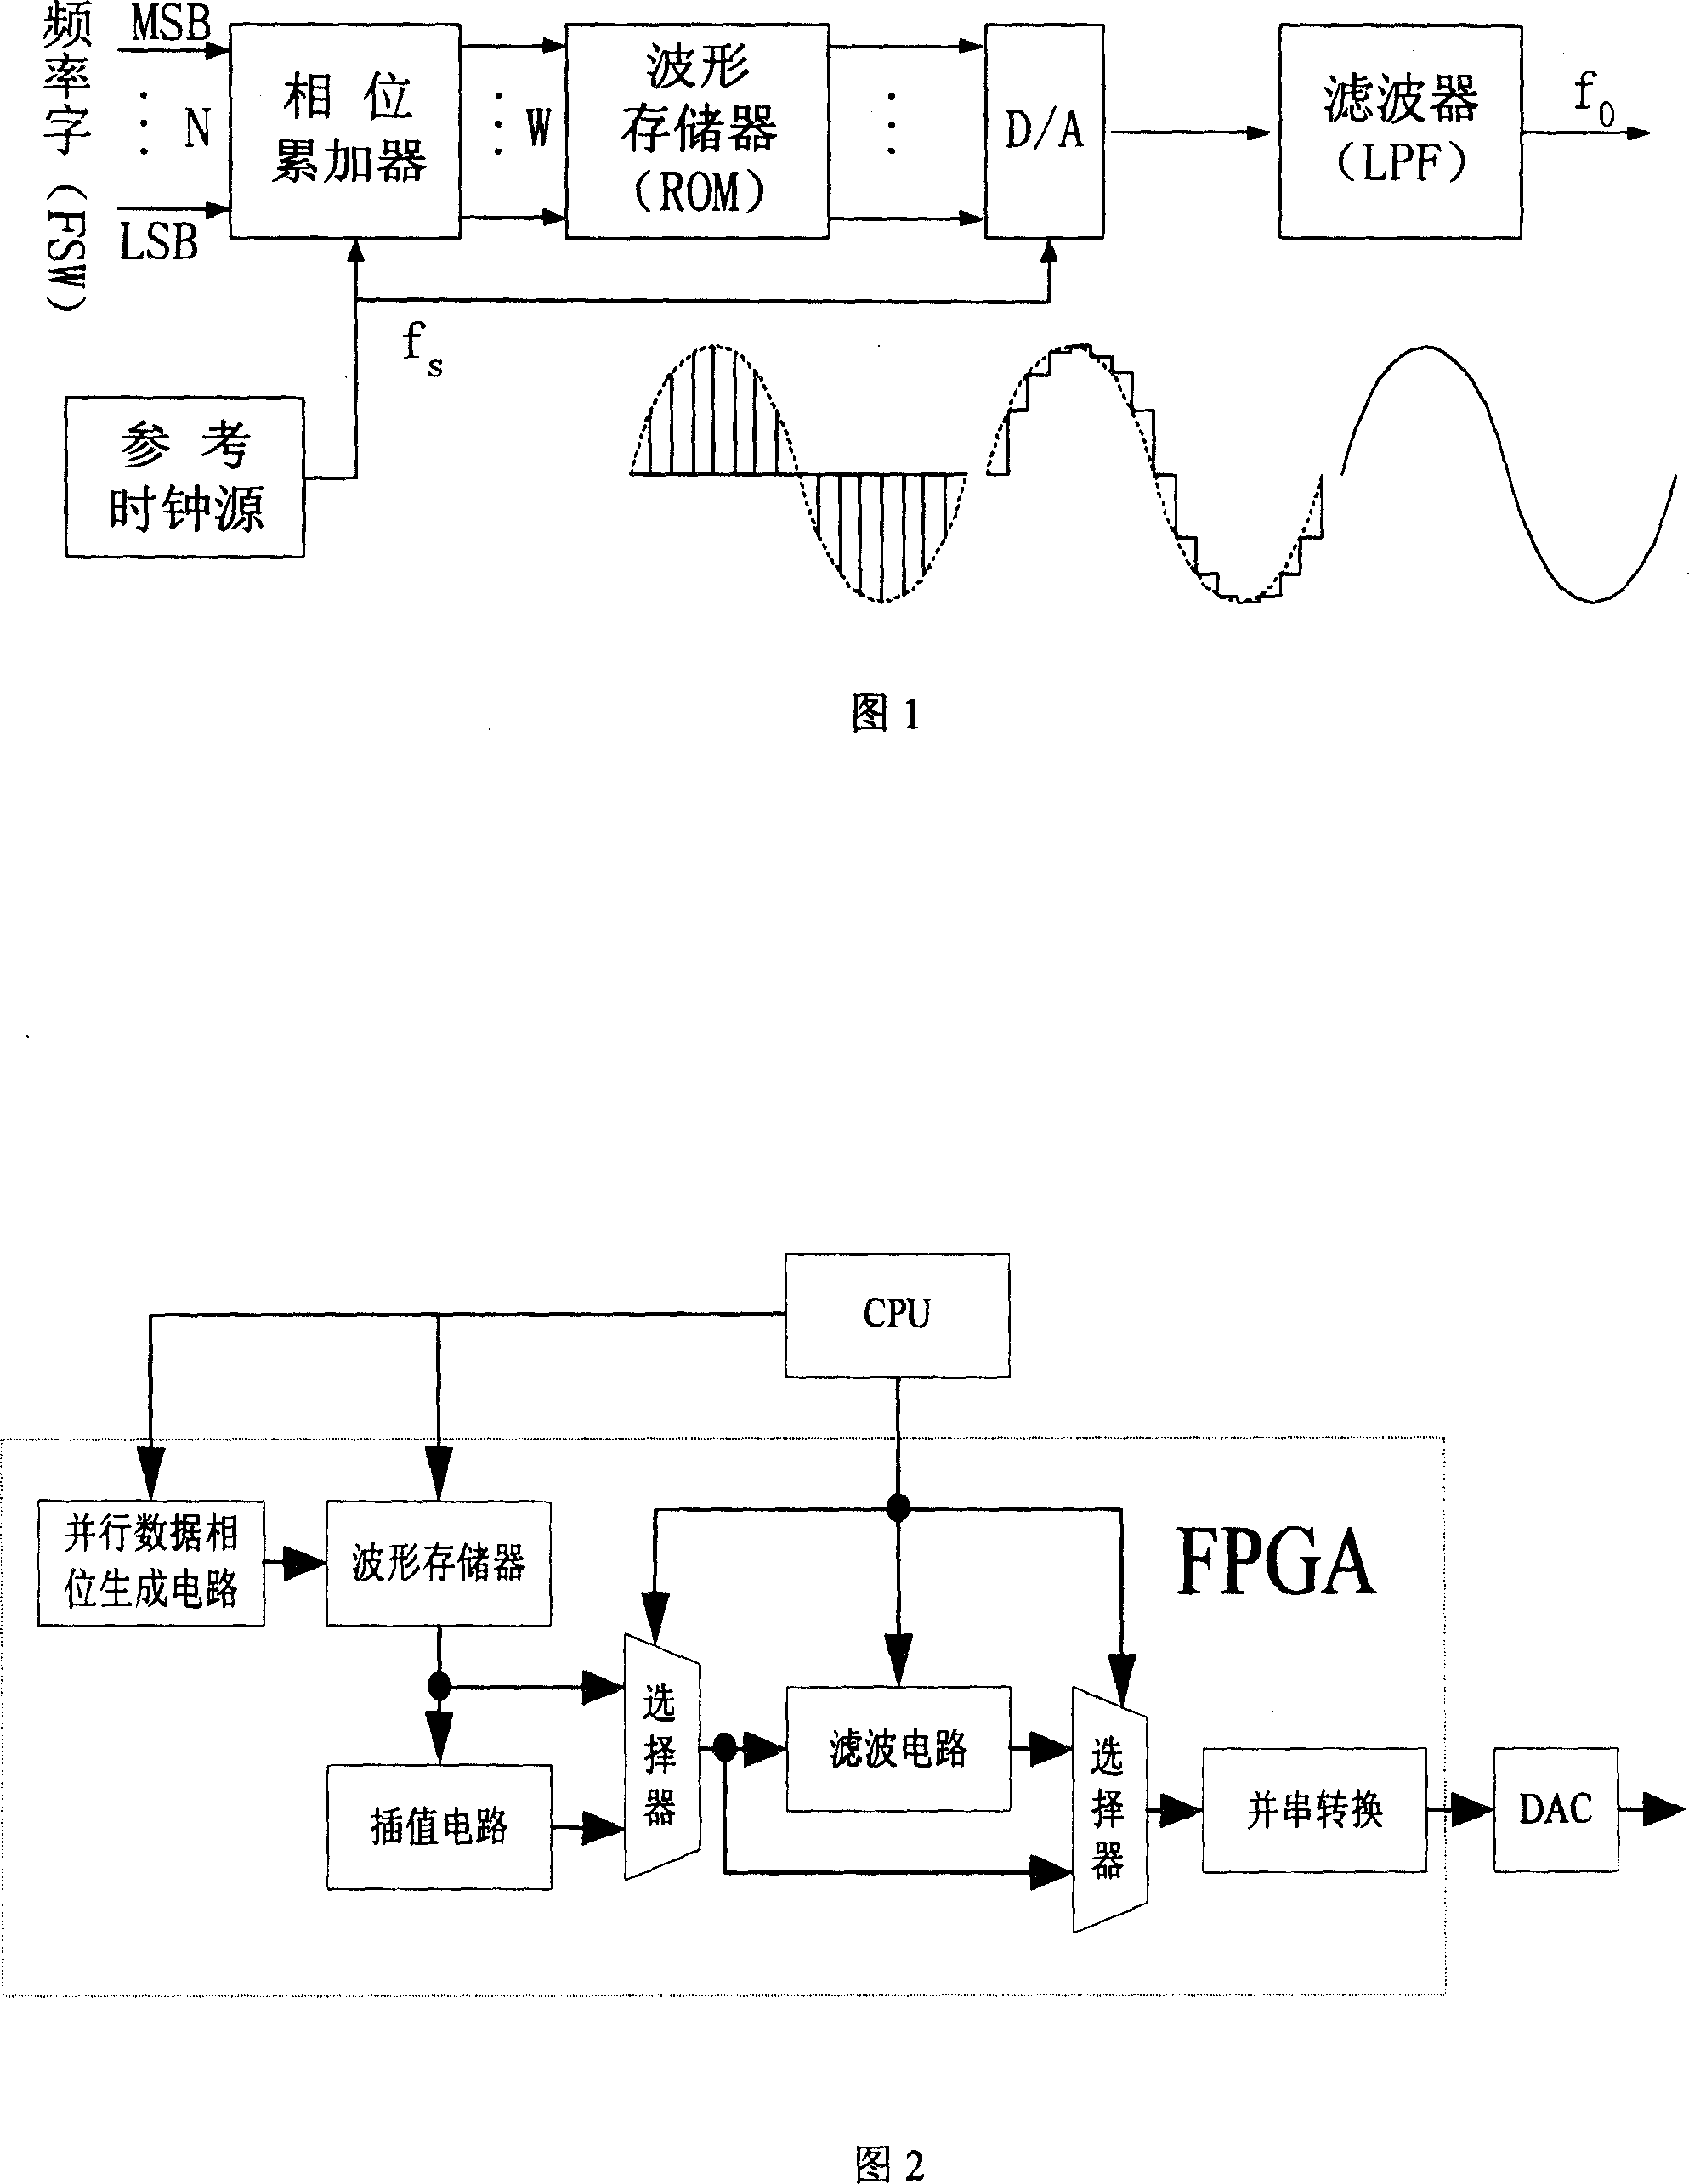 High speed arbitrary waveform generator based on FPGA